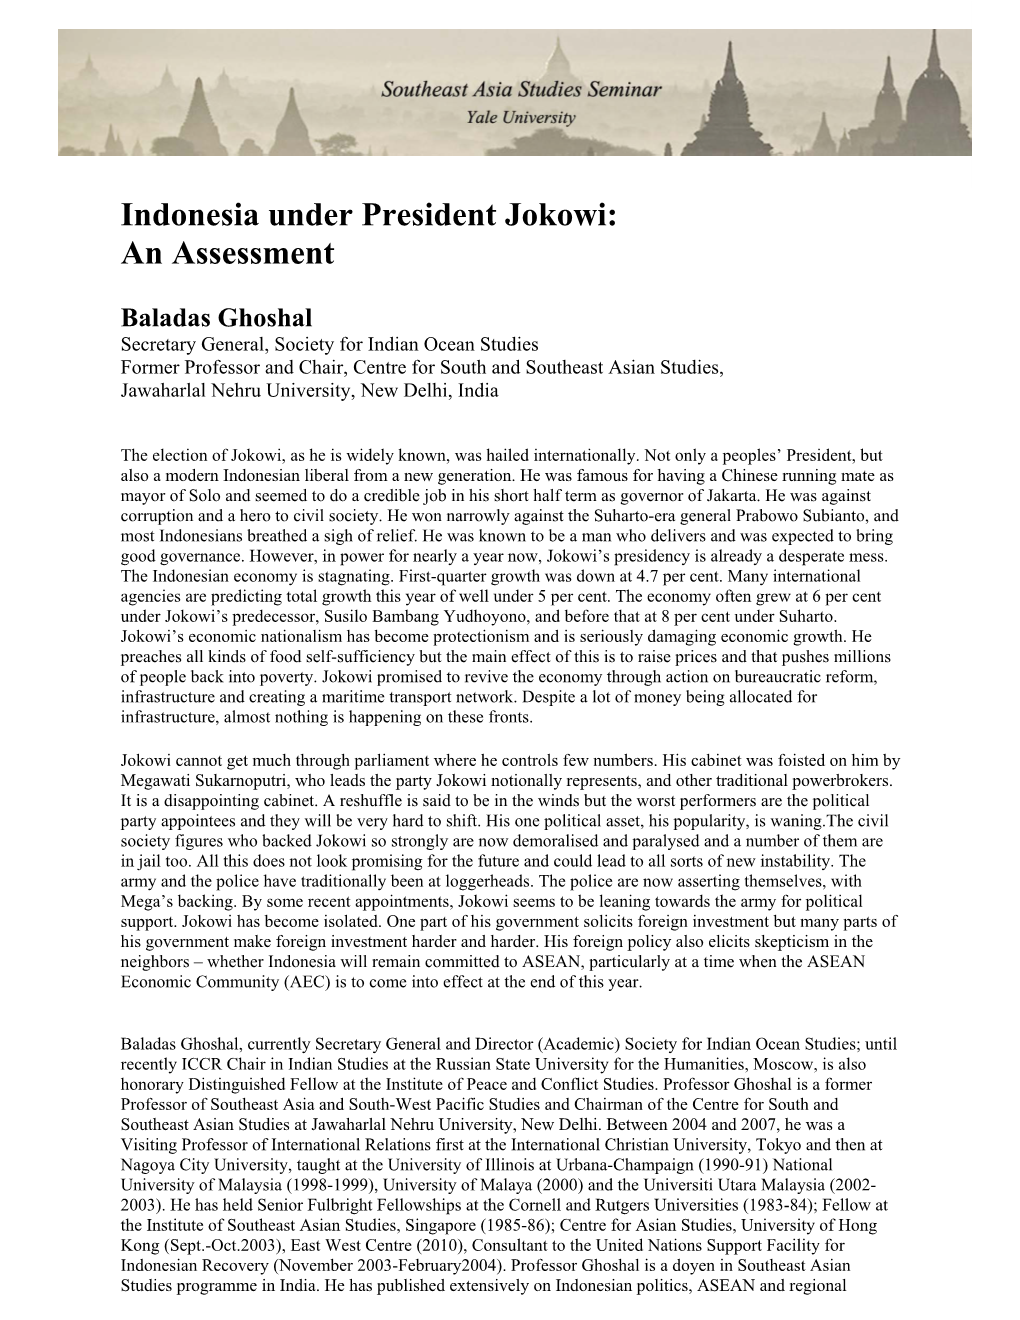 Indonesia Under President Jokowi: an Assessment